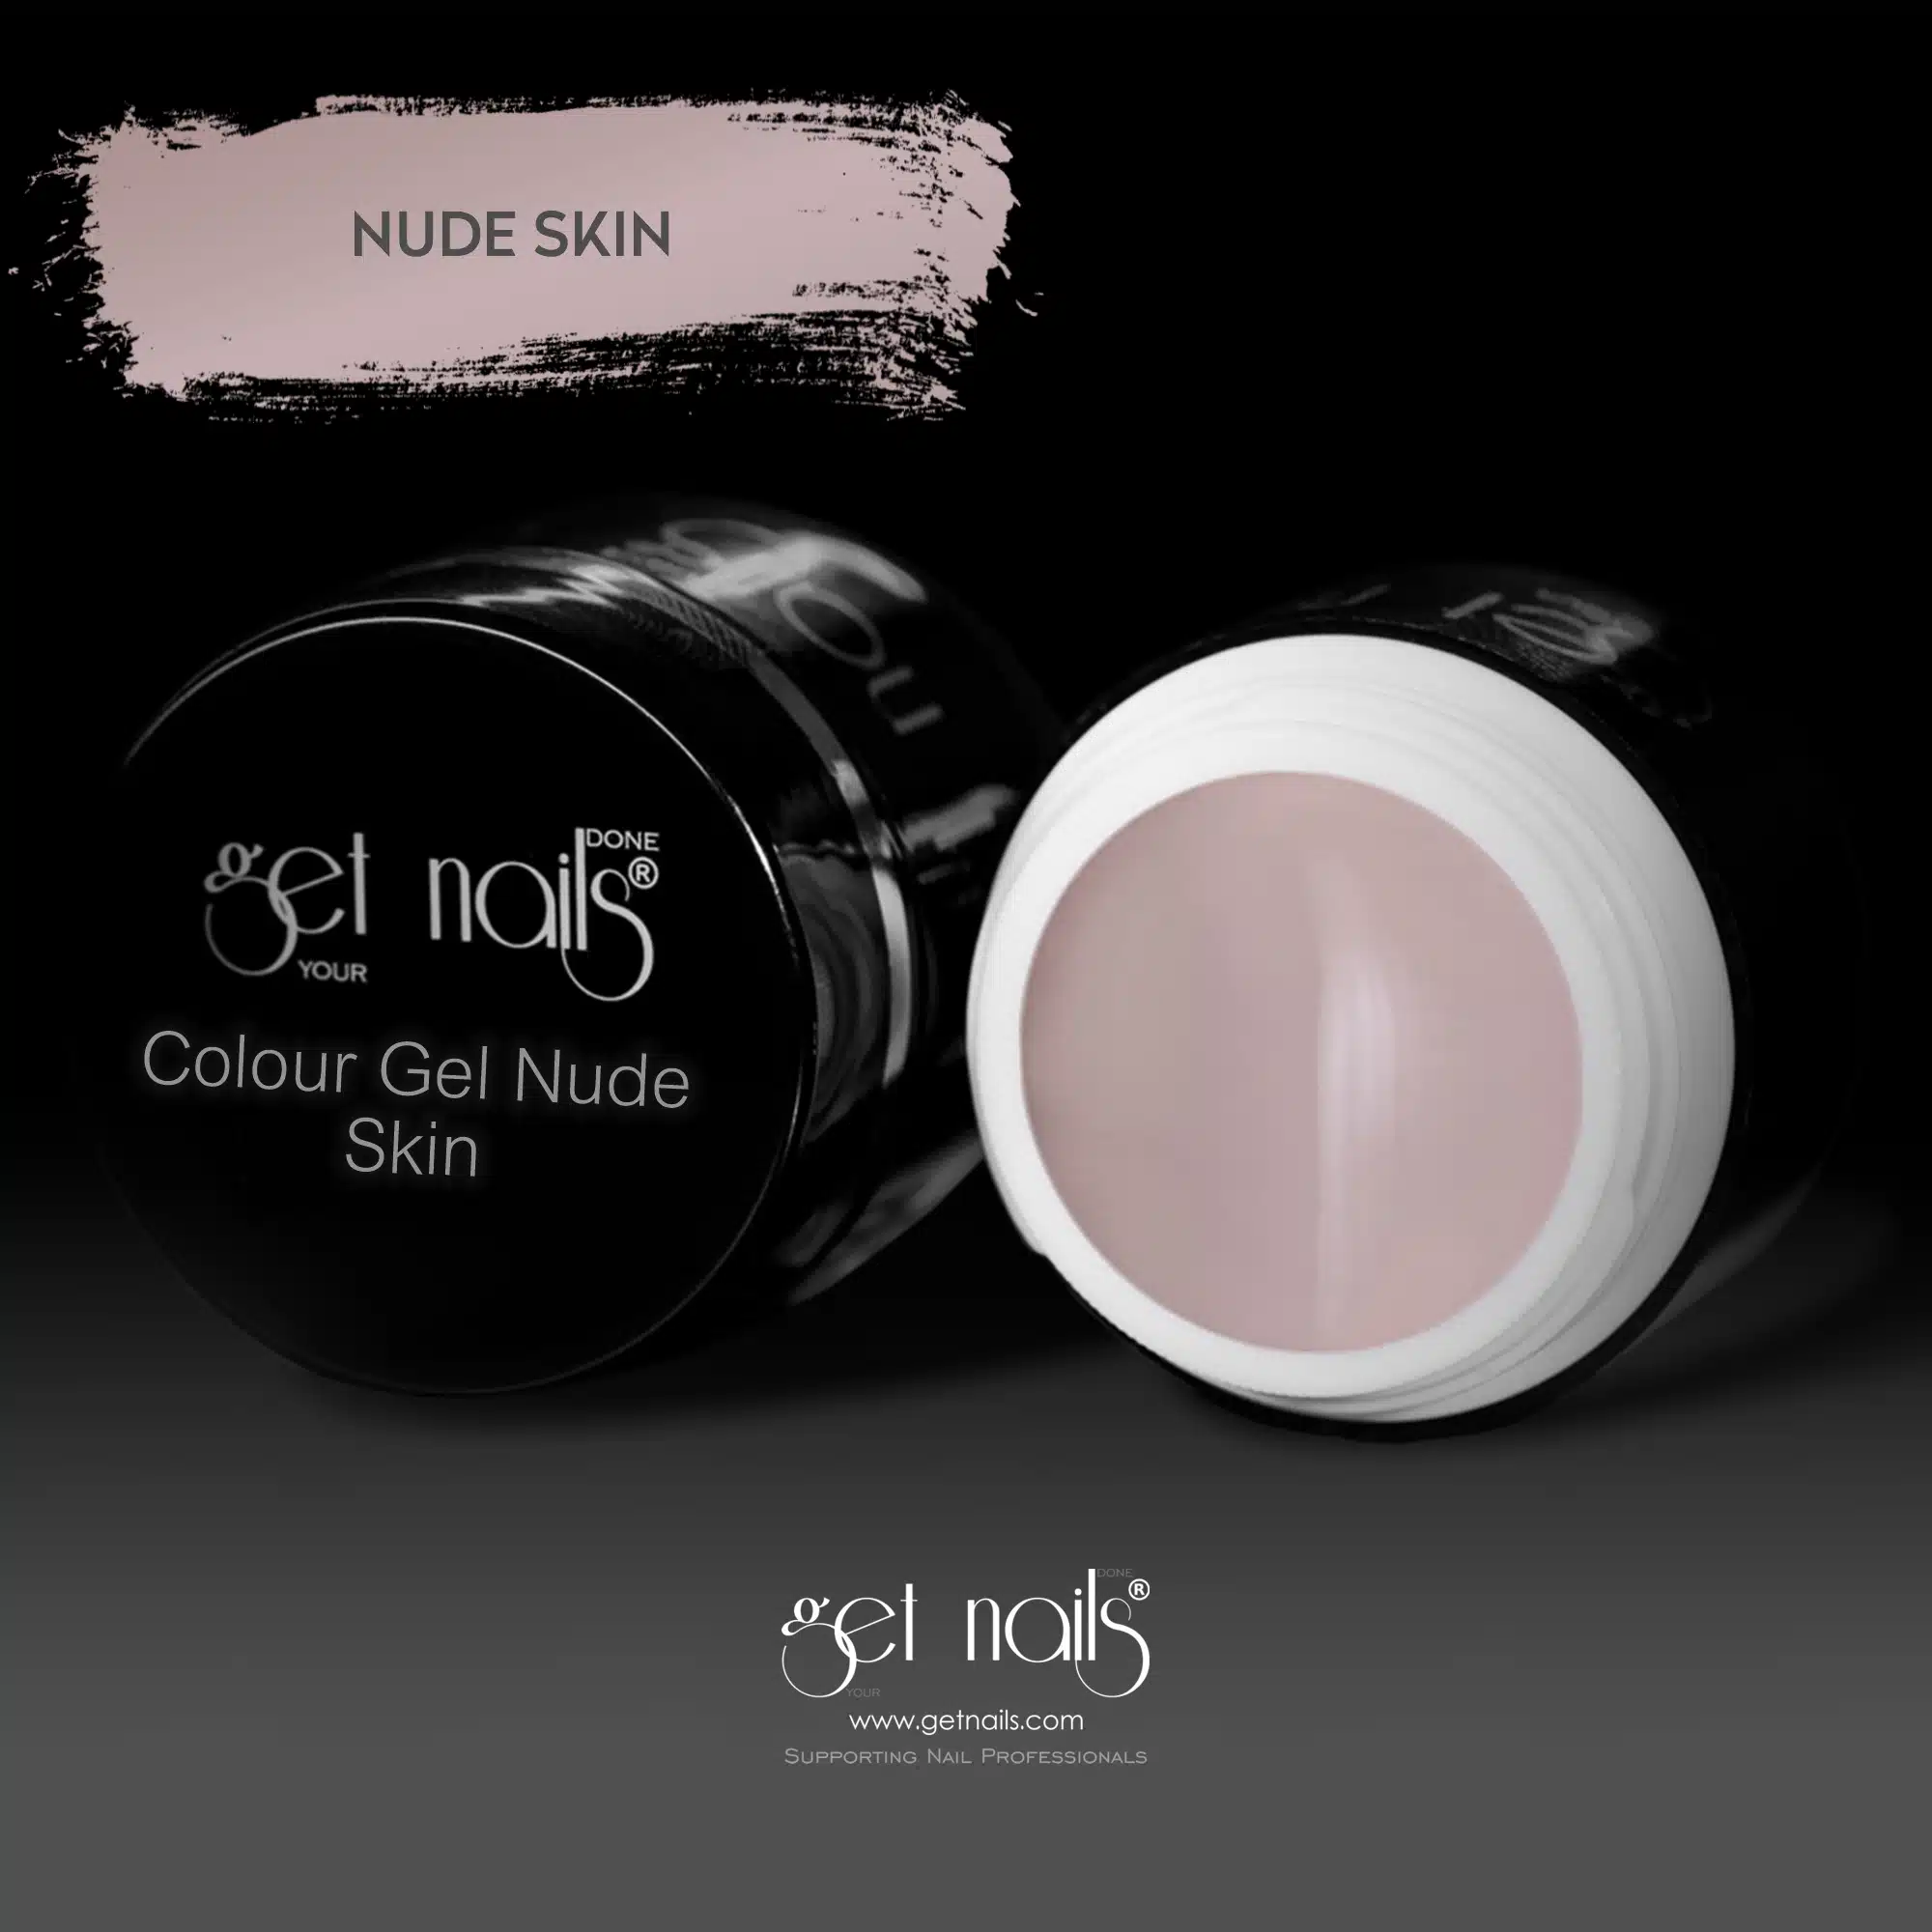 Get Nails Austria - Цветной гель Nude Skin 5g